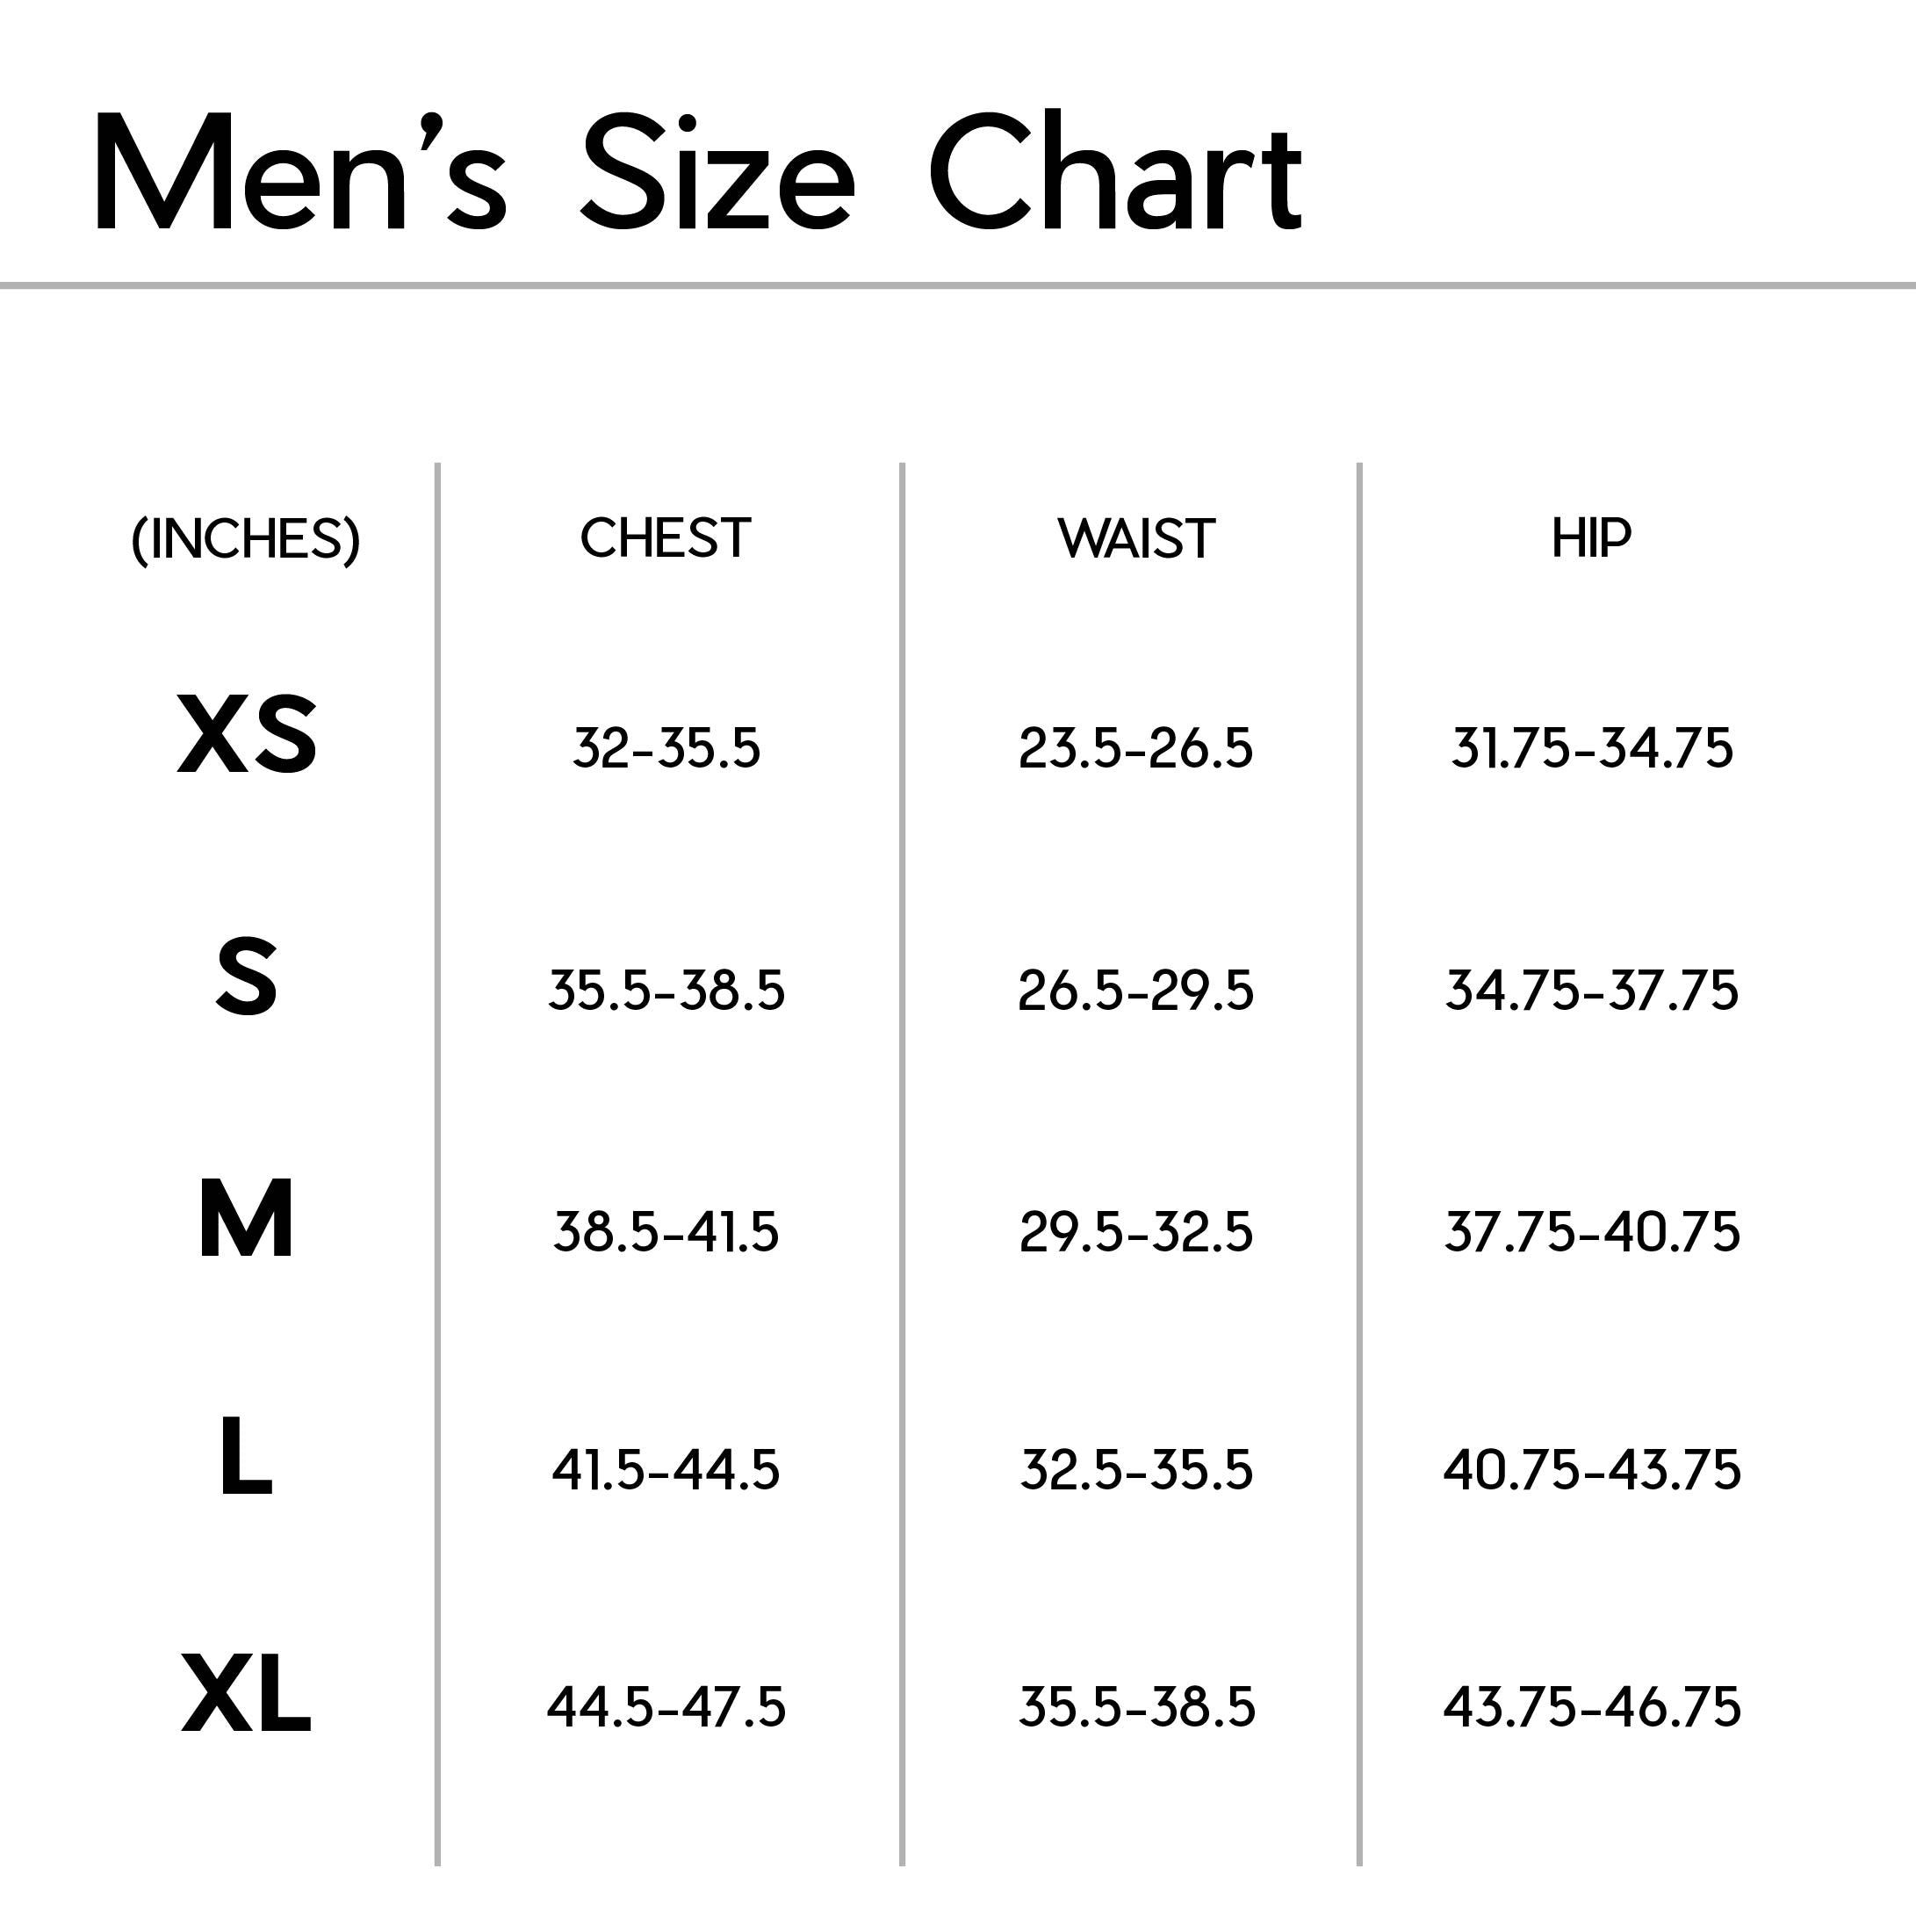 Measurement and Fit - Men's